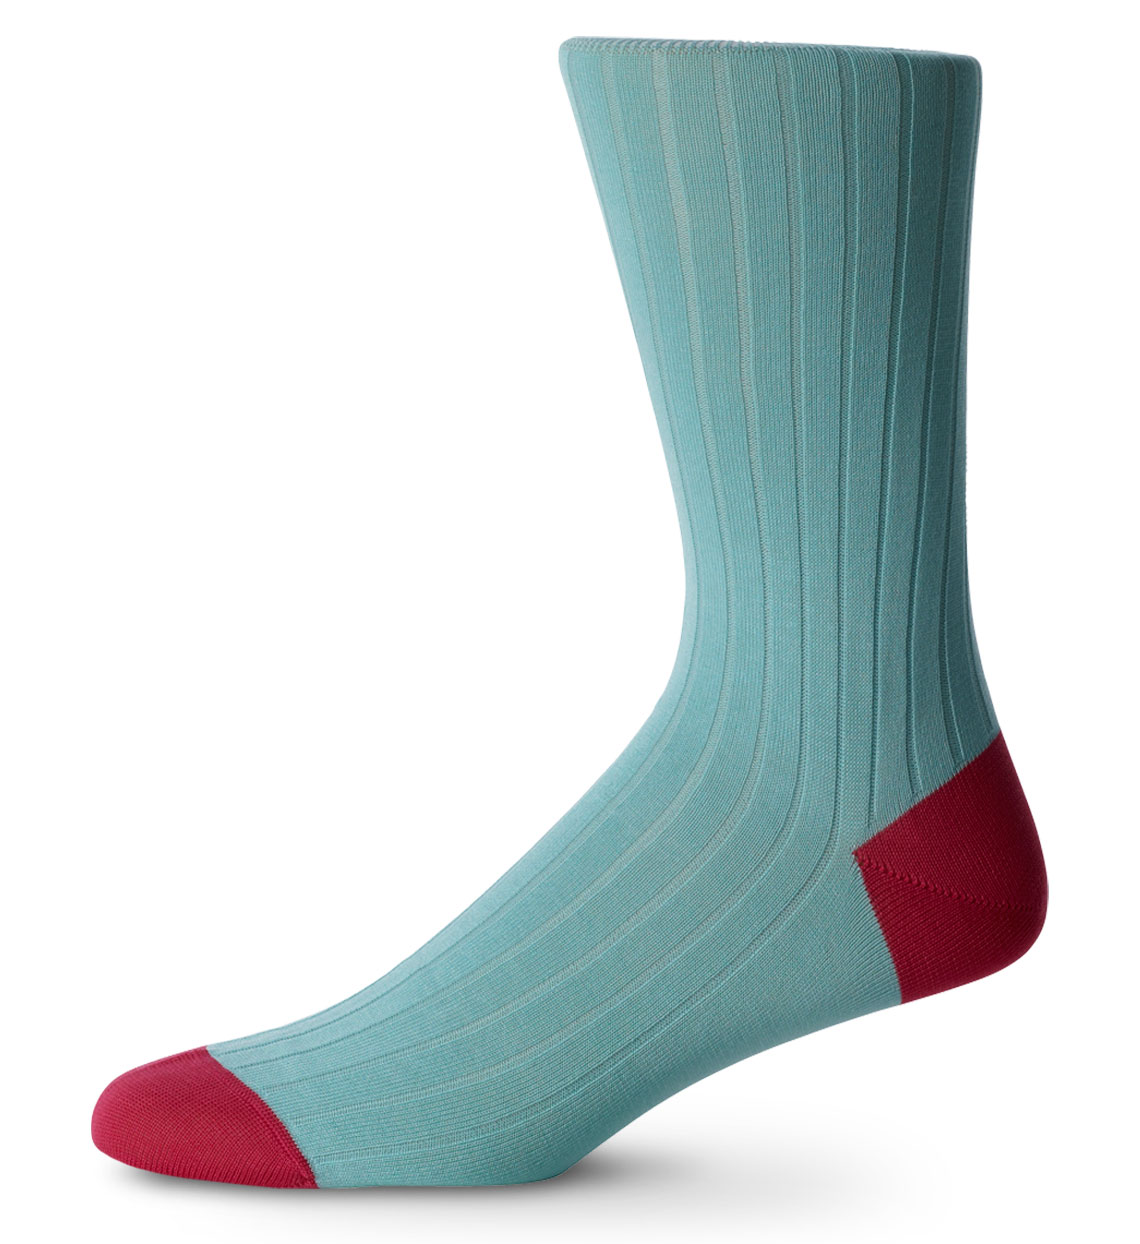 English Cotton Lisle Socks Light Turquoise & Pink - Dalvey